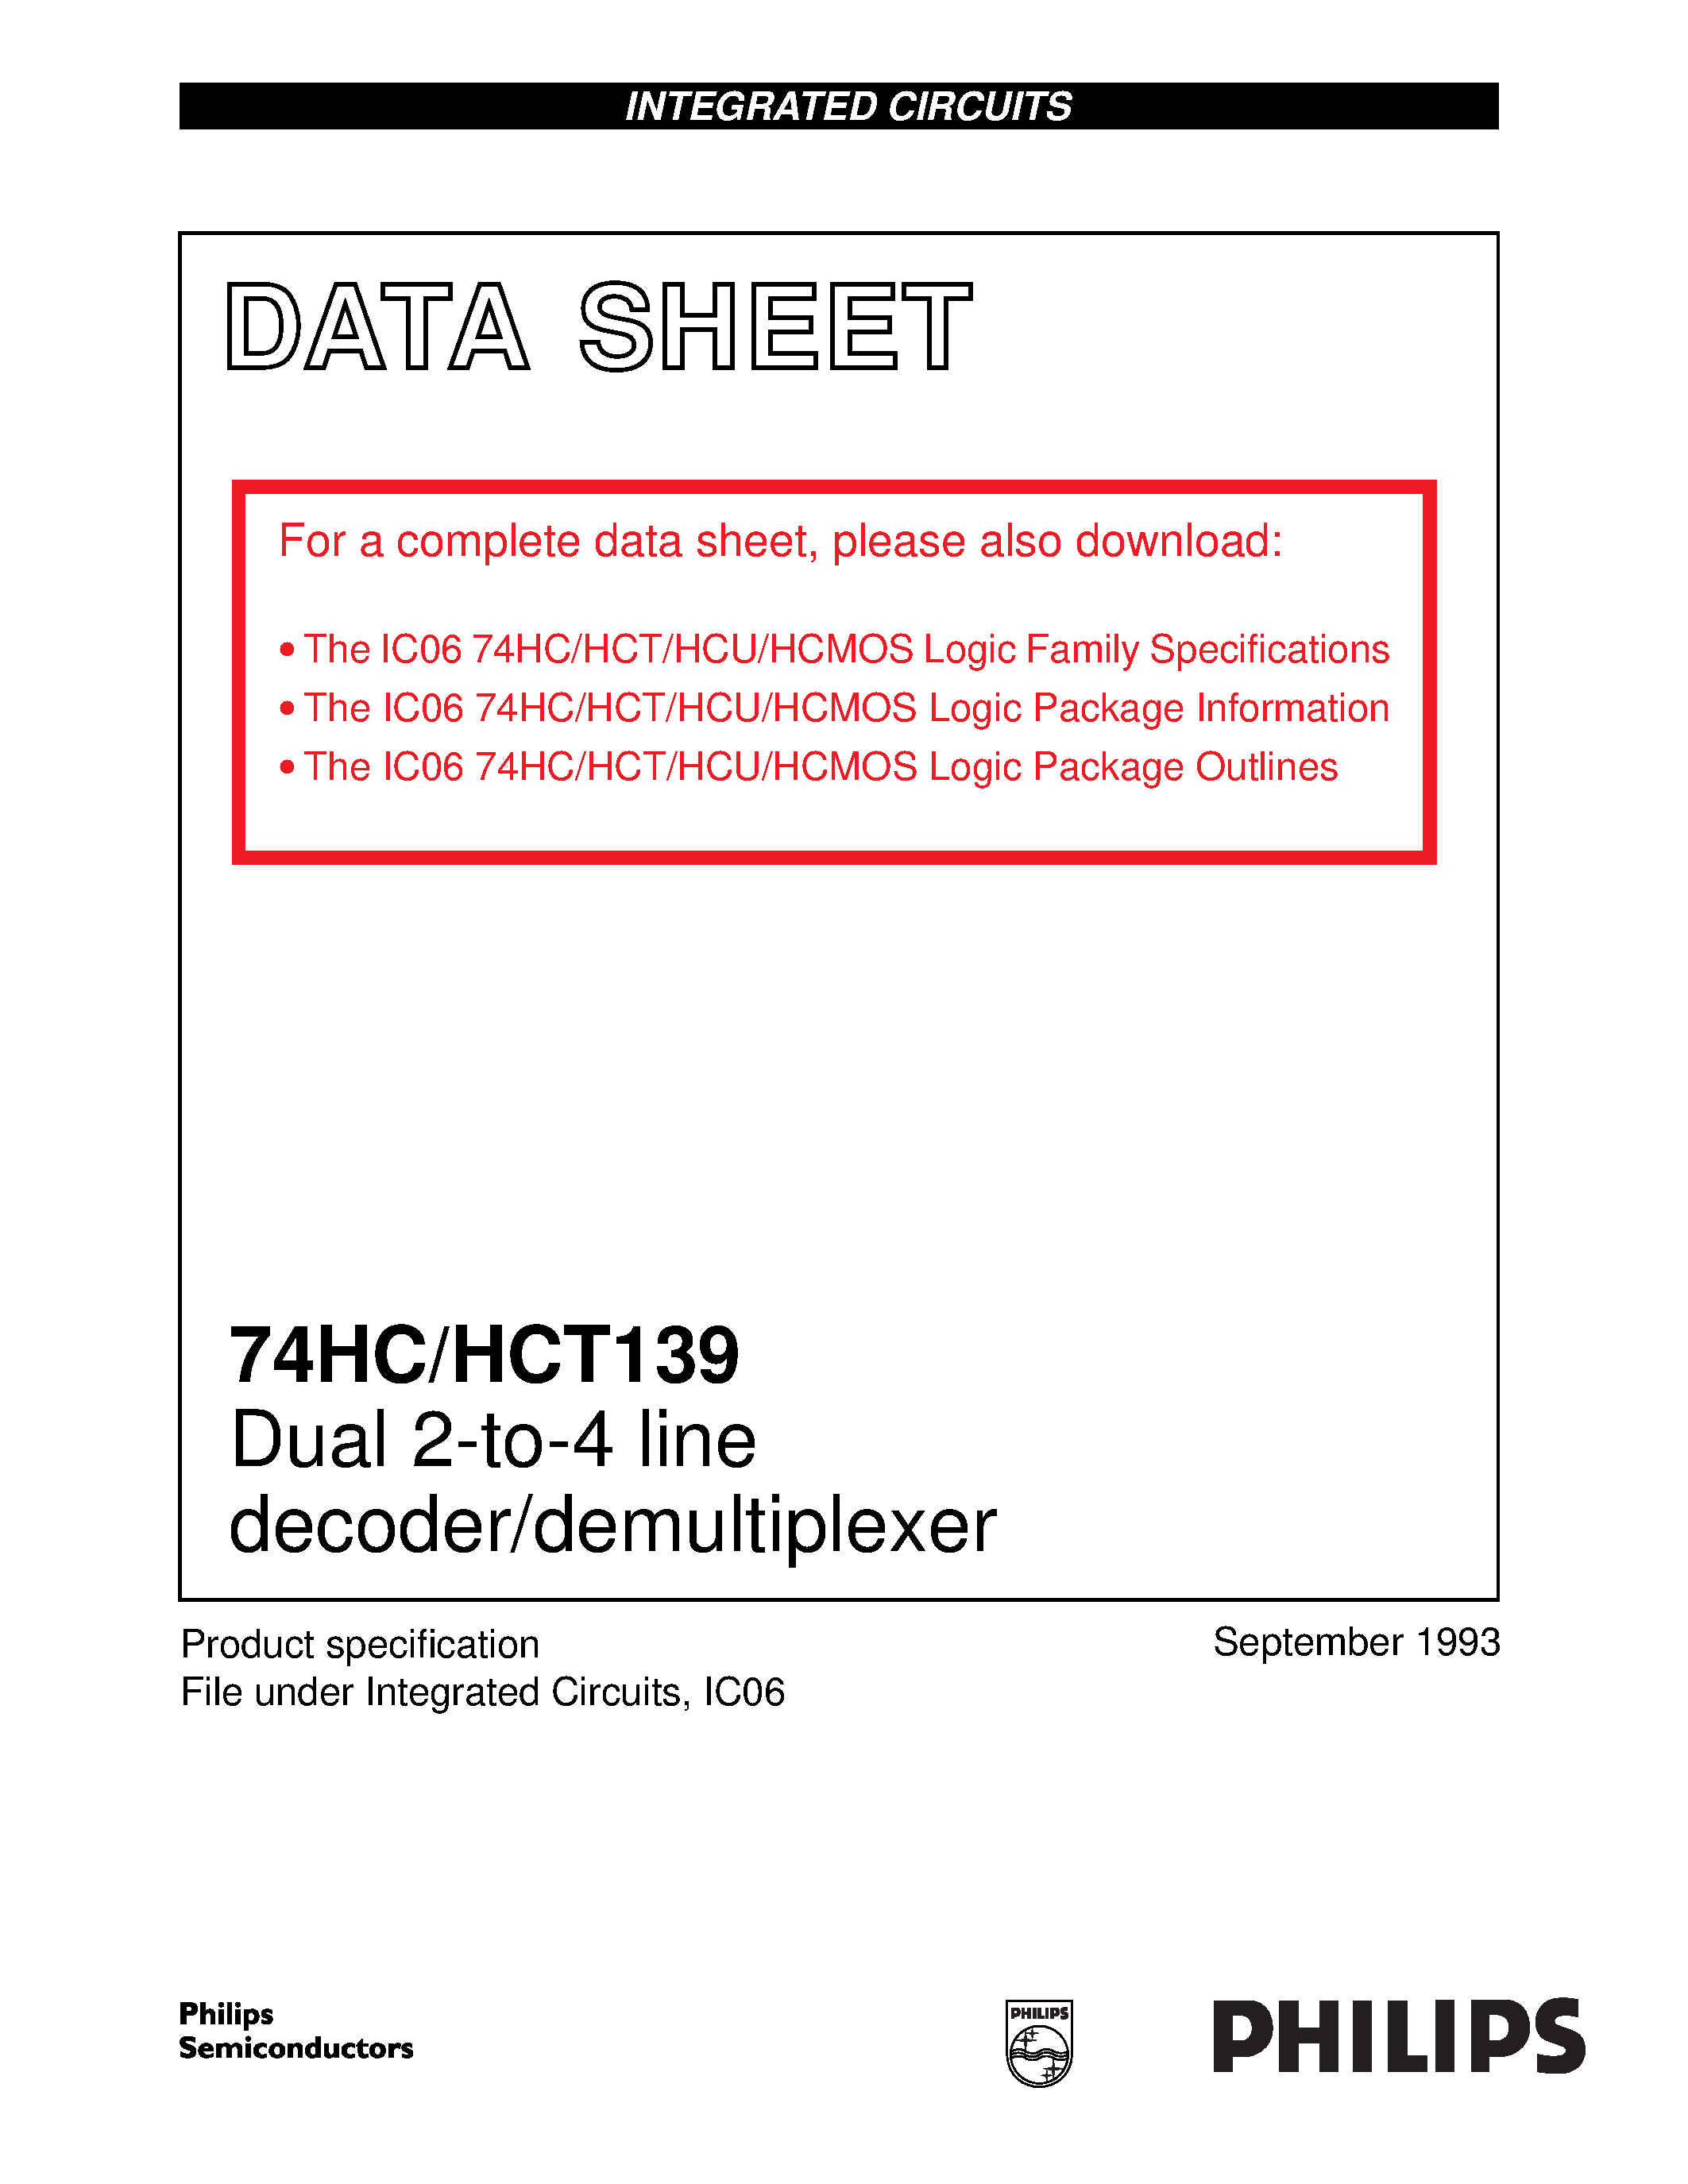 Даташит 74HCT139 - Dual 2-to-4 line decoder/demultiplexer страница 1